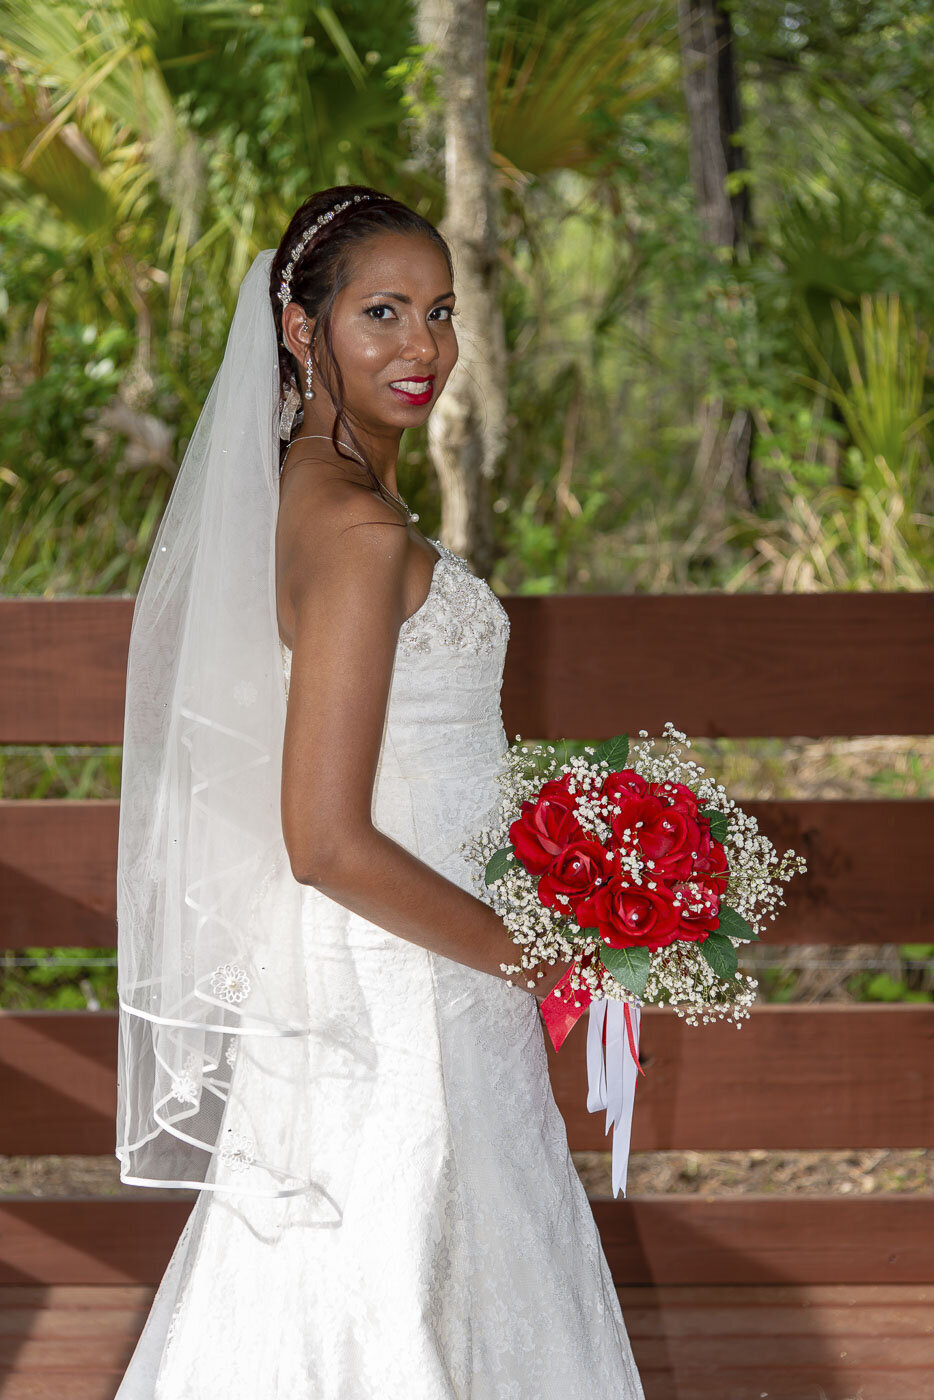 The bride poses for a bridal portrait